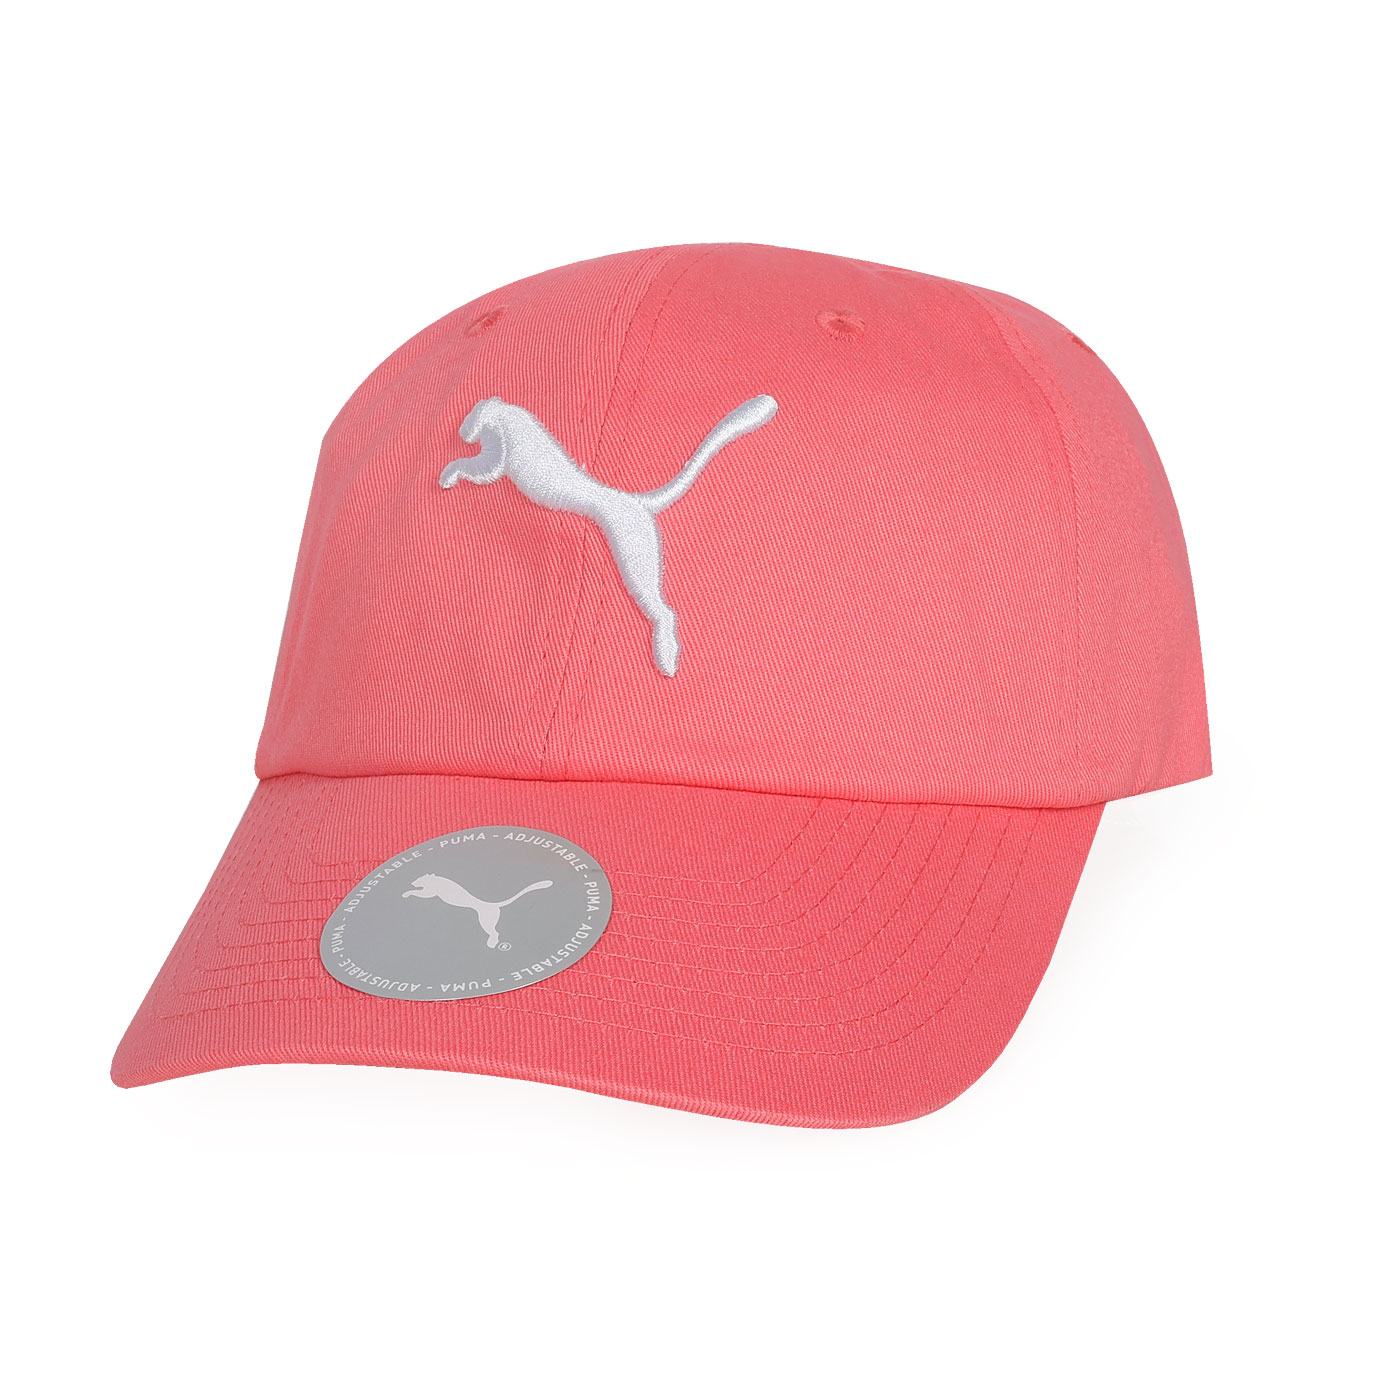 PUMA 基本系列跳豹棒球帽  02458712 - 亮粉紅白